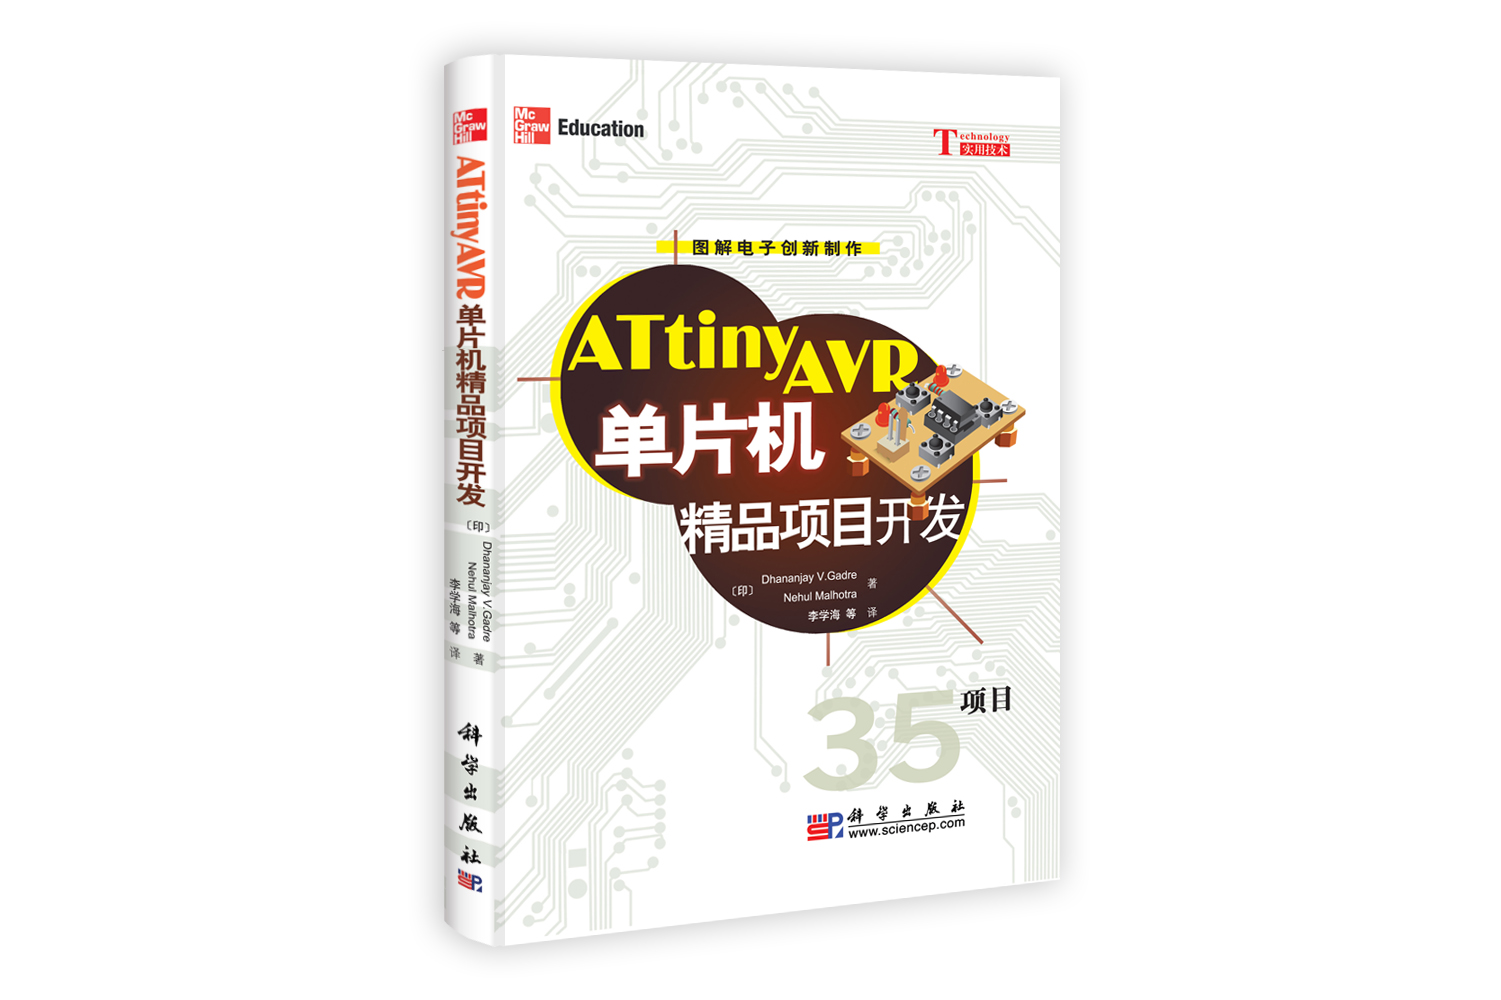 ATtinyAVR单片机精品项目开发